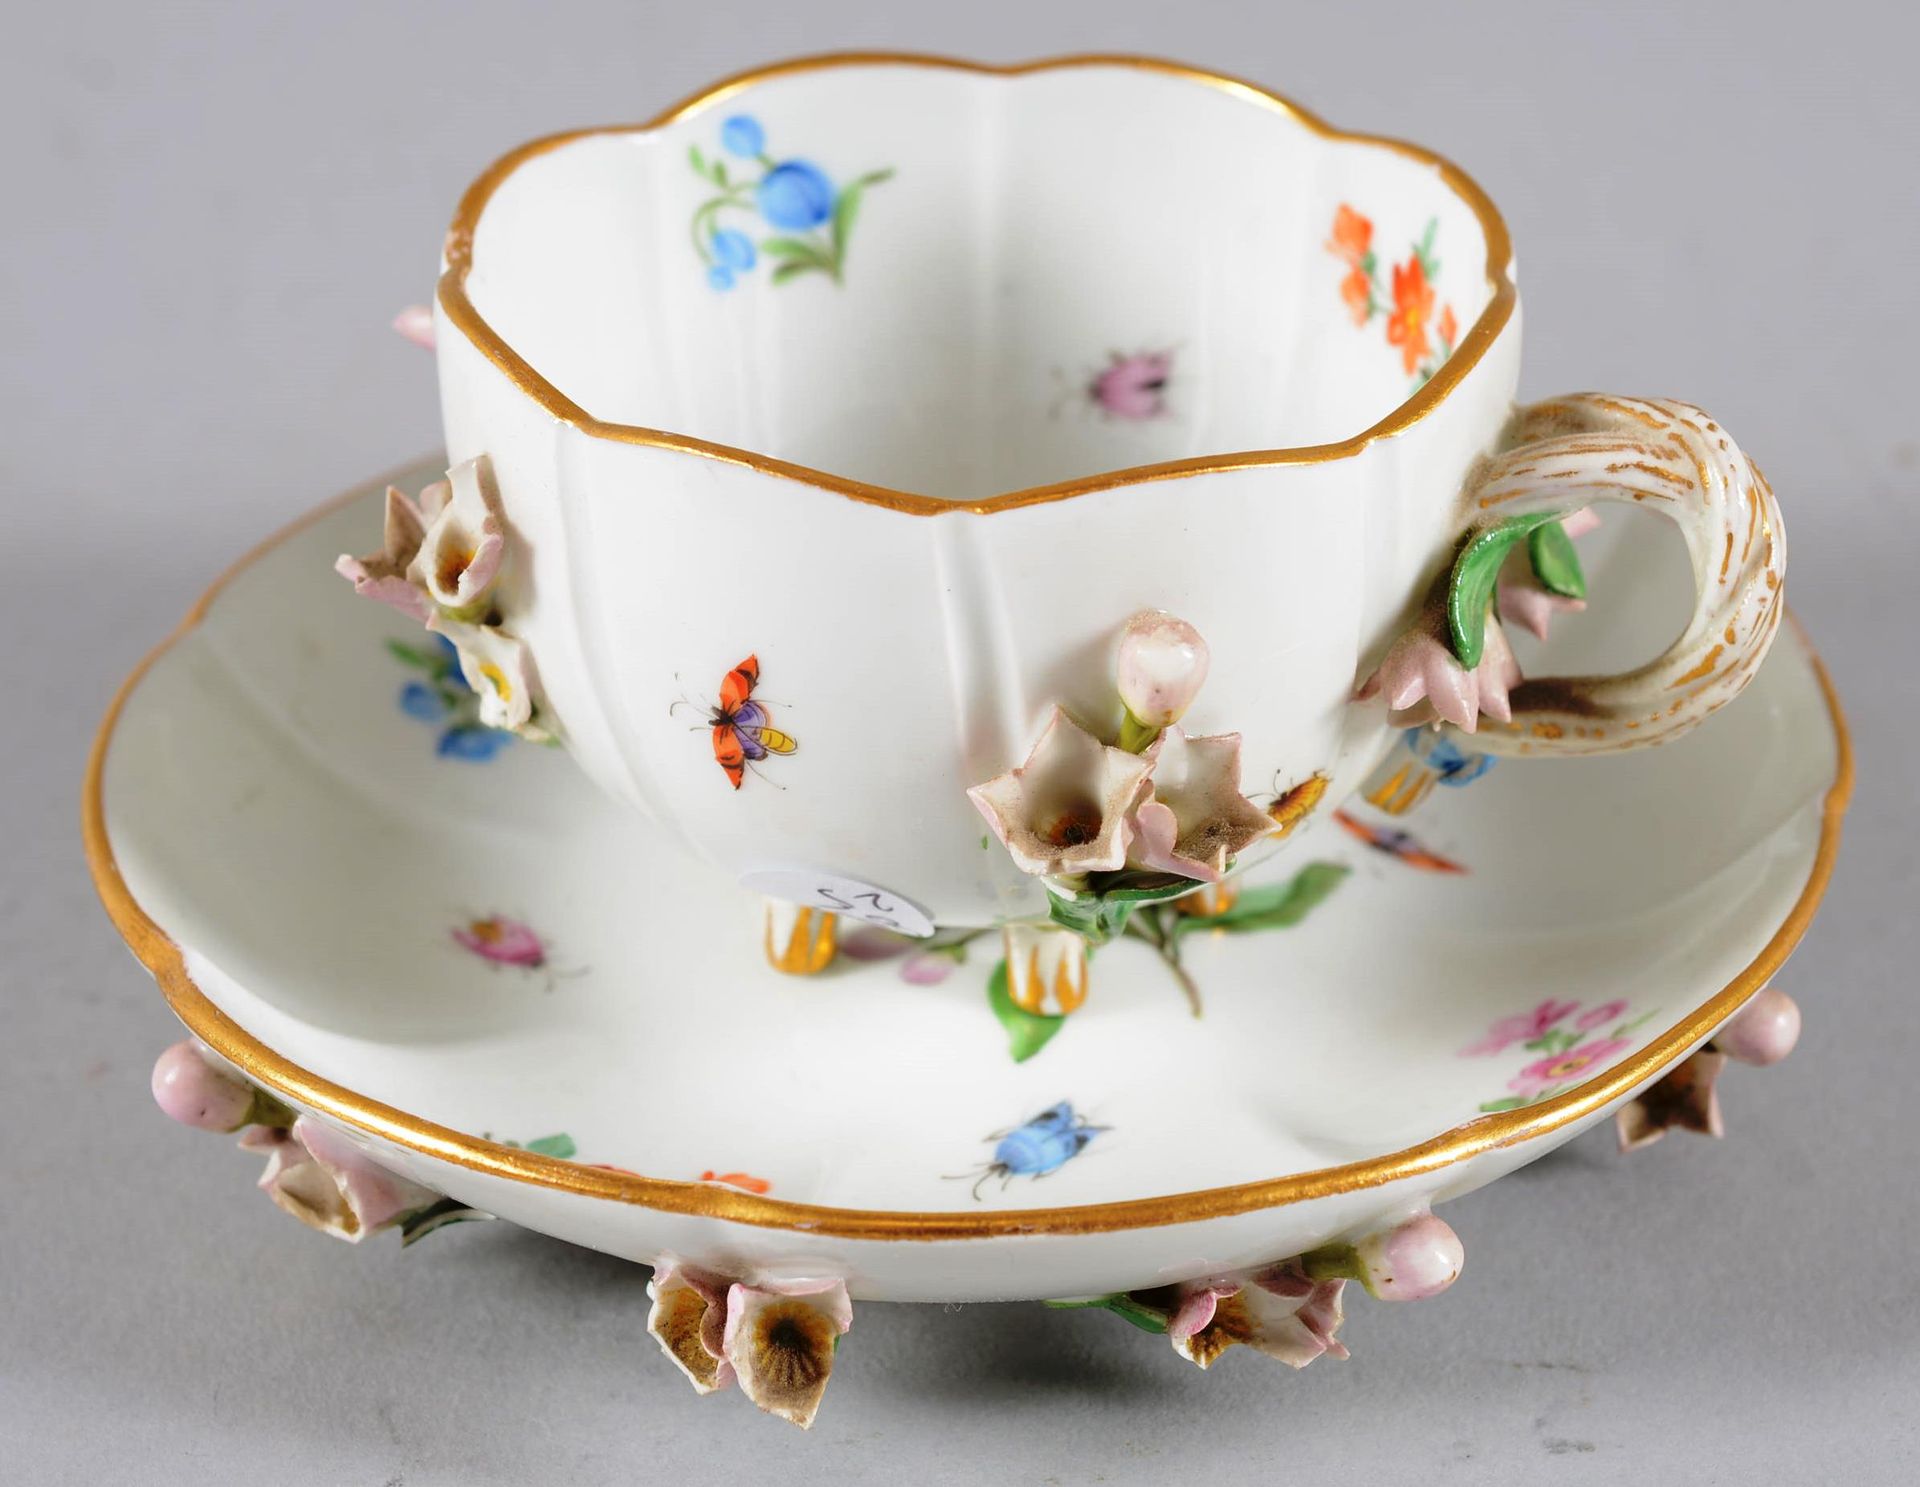 Petite tasse et soutasse.MEISSEN. MEISSEN.

Small porcelain cup and saucer with &hellip;